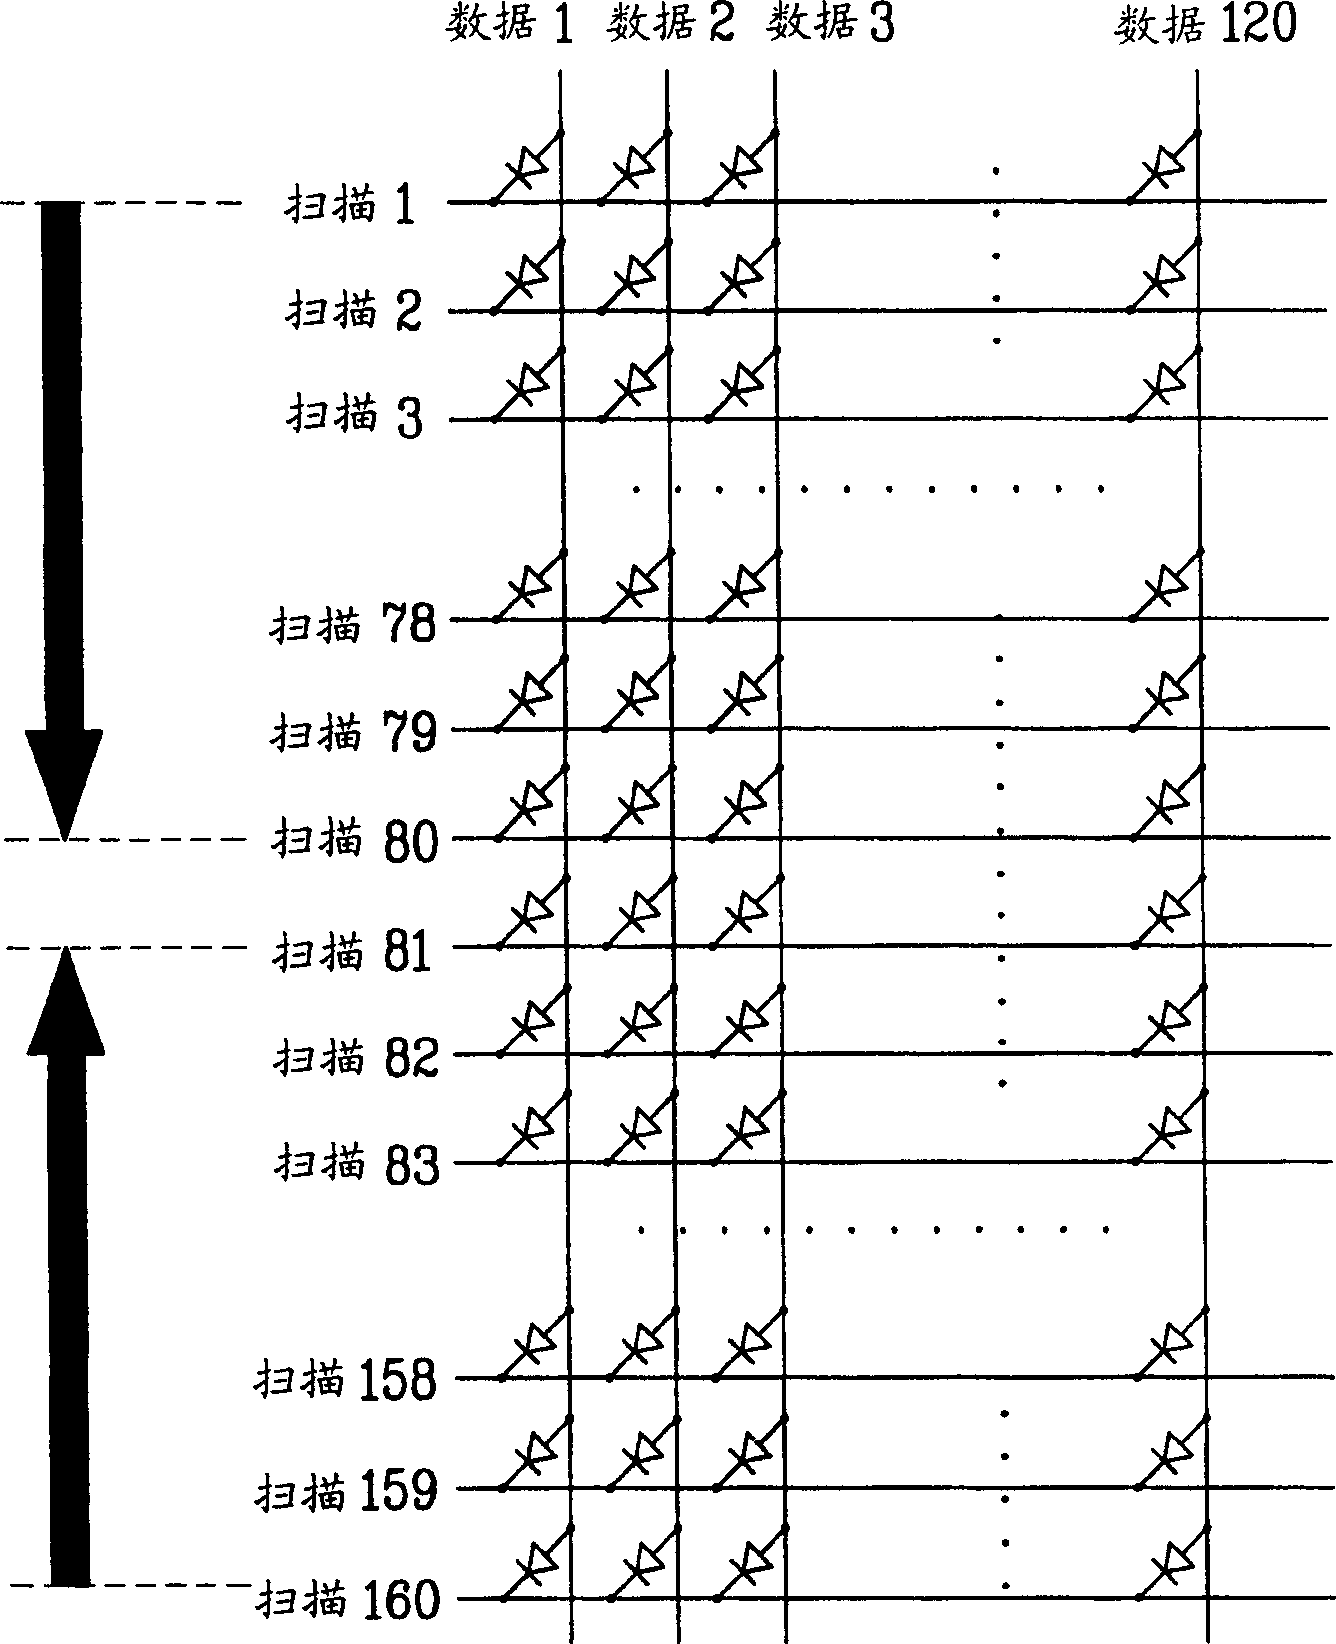 Dual scan method of matrix display panel